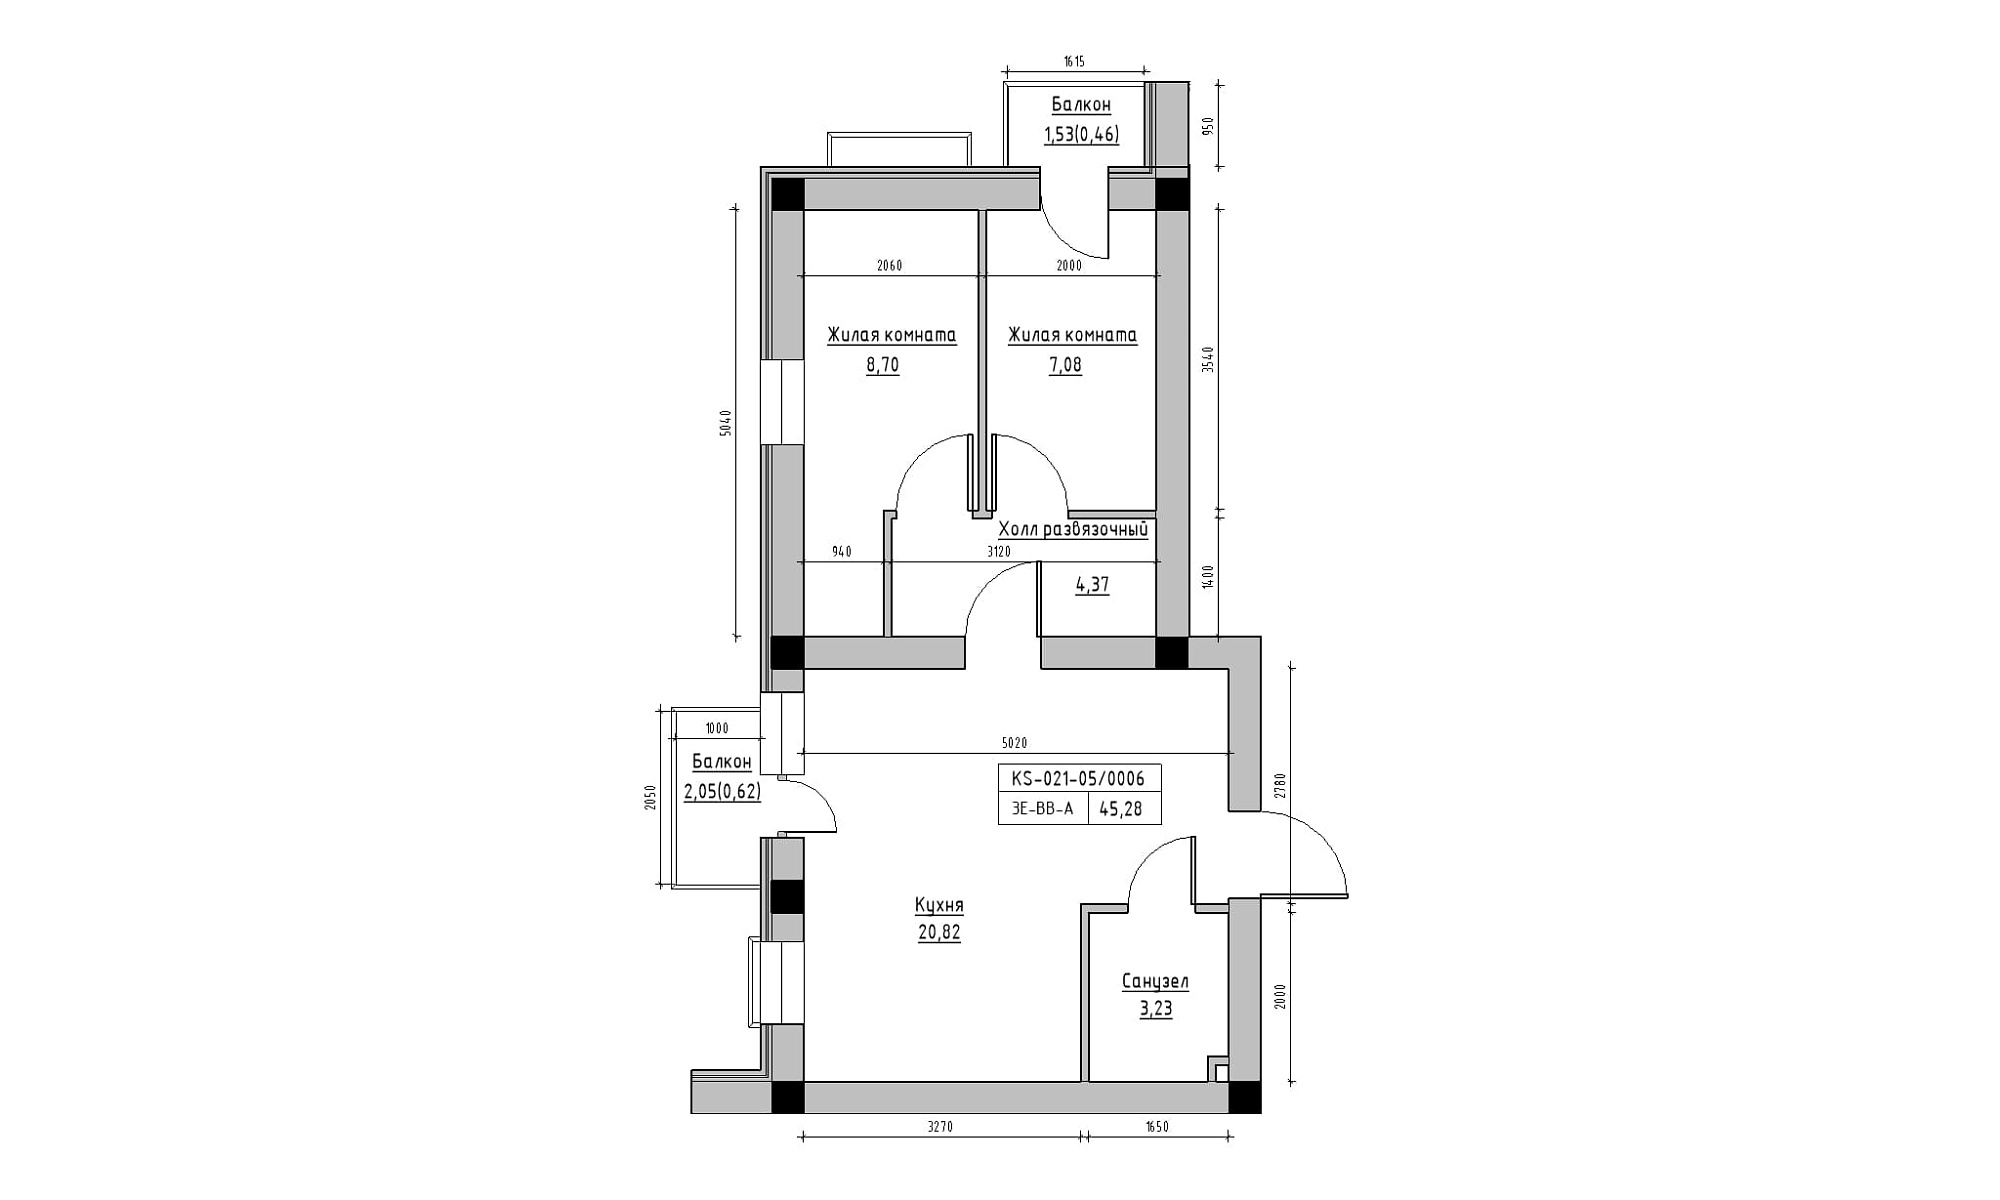 Planning 3-rm flats area 45.28m2, KS-021-05/0006.